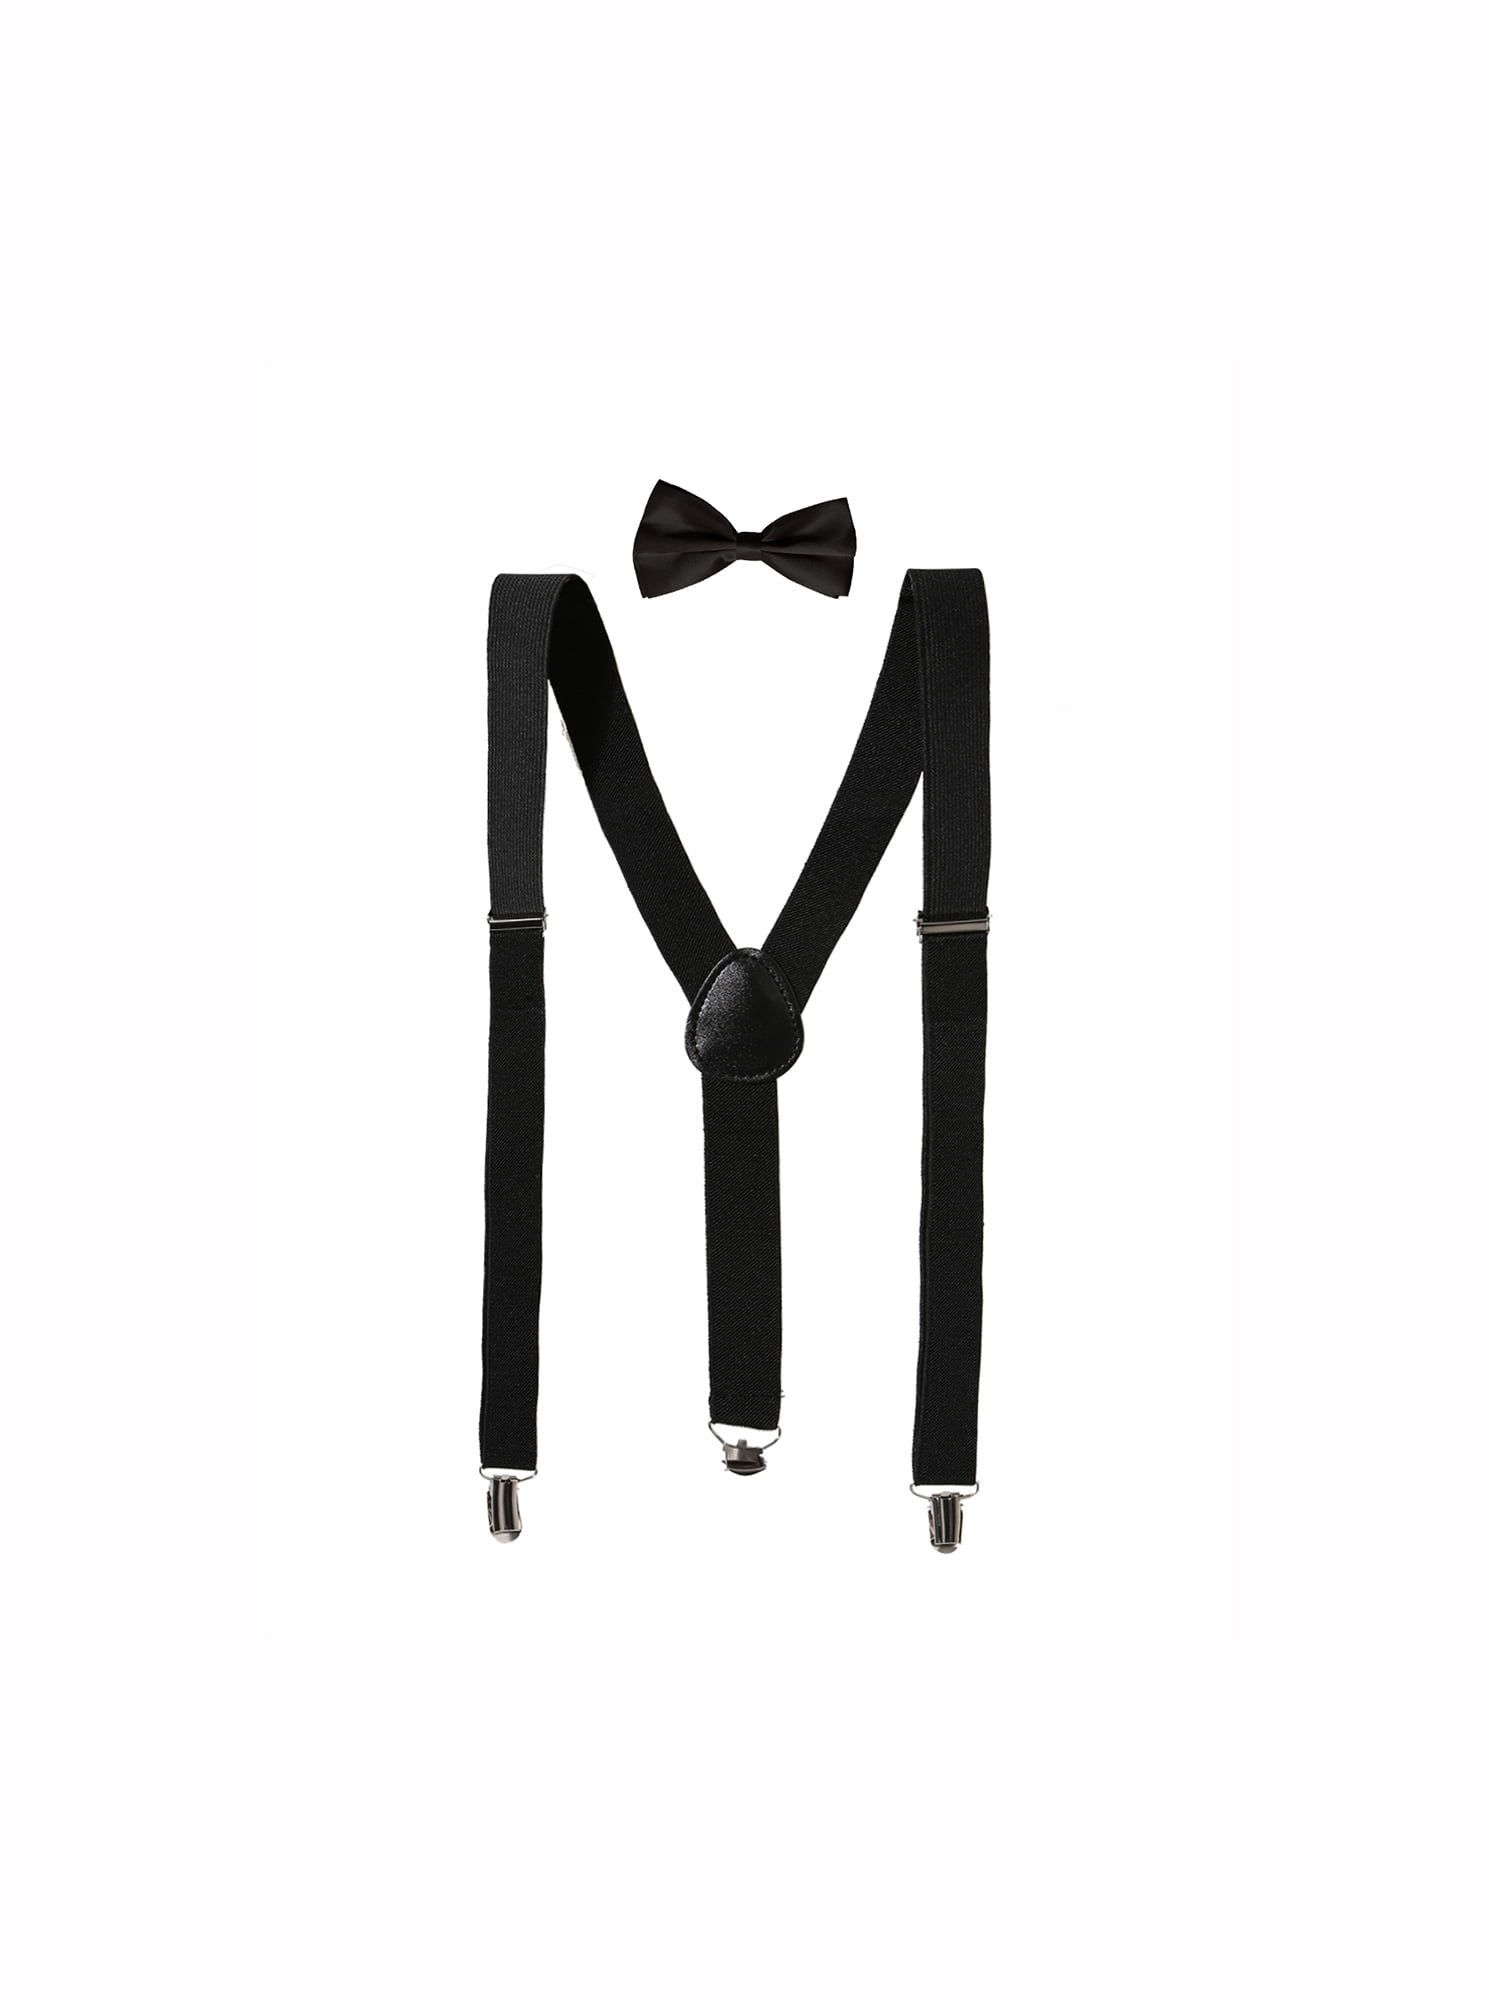 Womens Suspender Bow Tie Set Y Shape Adjustable Rainbow Checker Flag Black